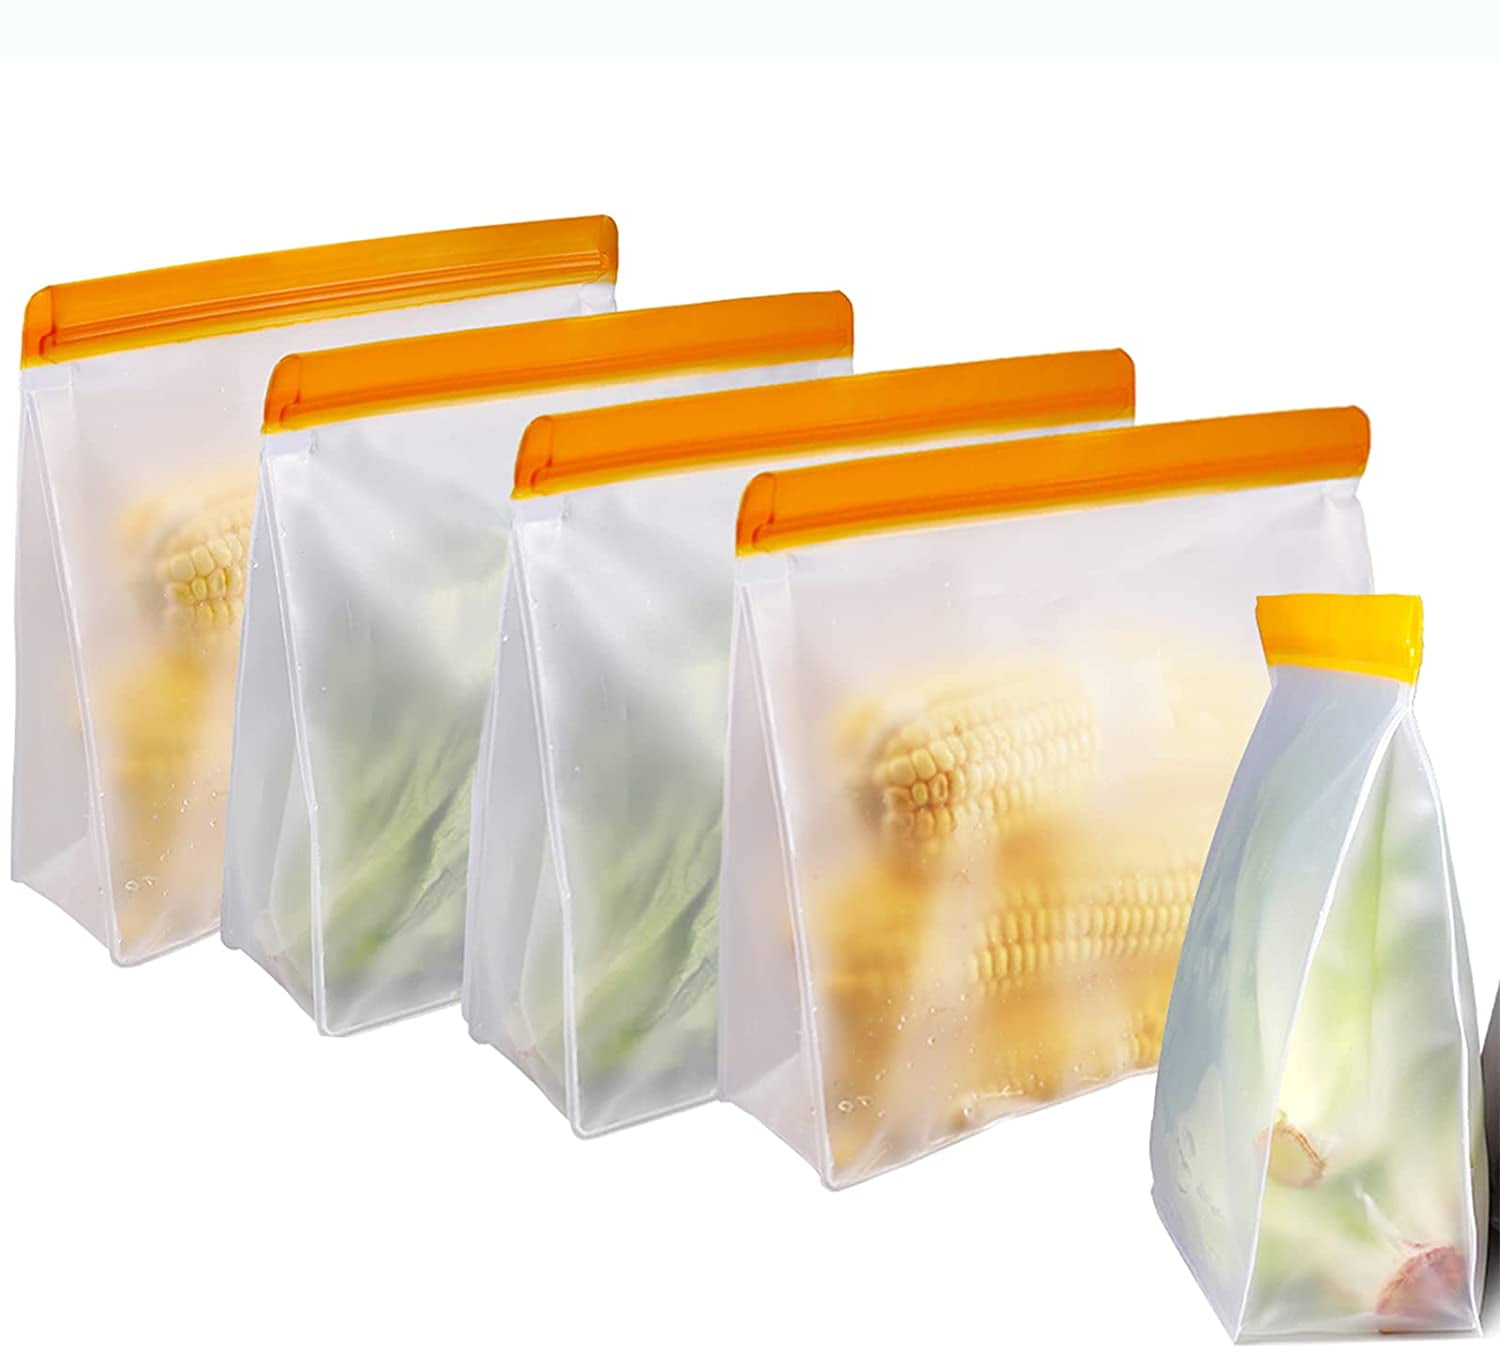 20pack Reusable Vacuum Zipper Seal Bags Quart, Gallon Size for